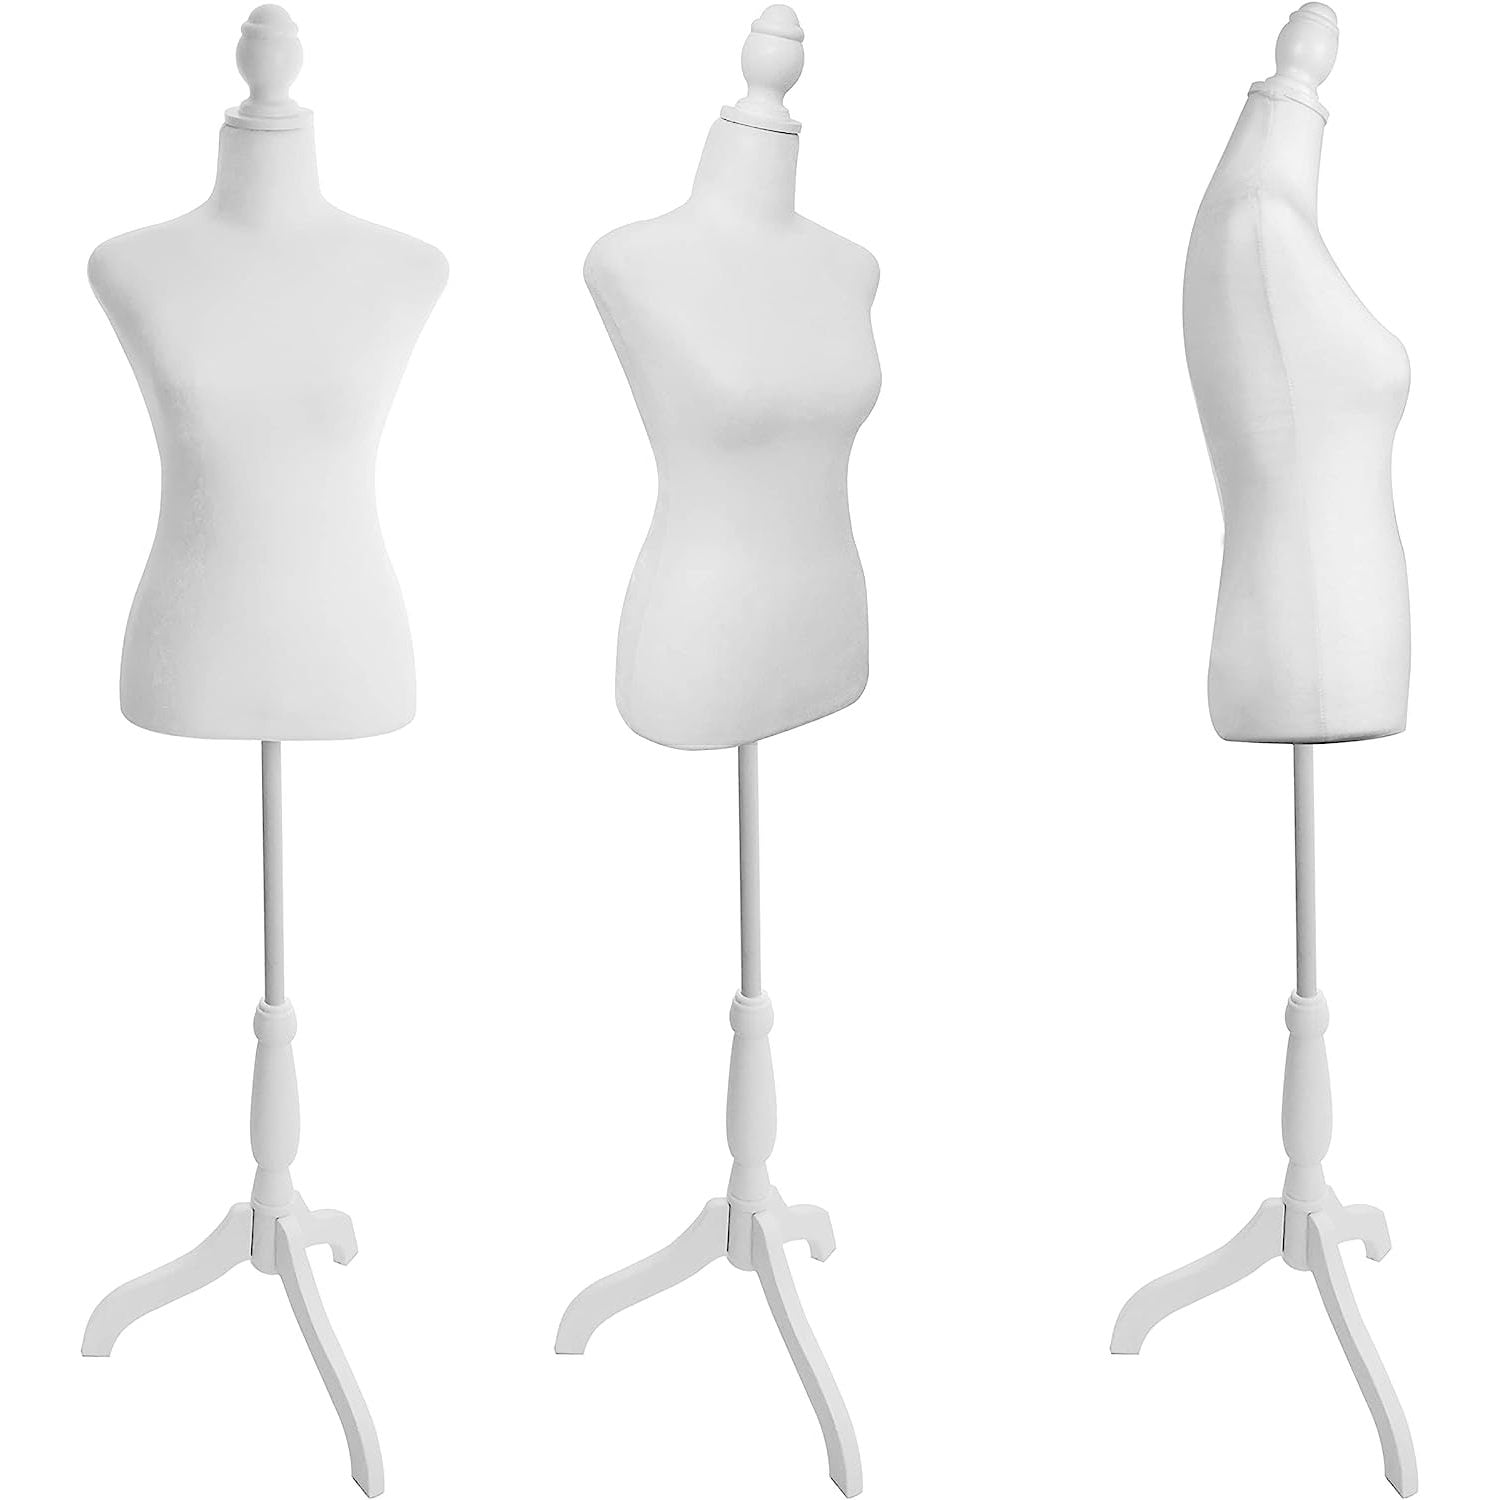 Gymax Female Mannequin Egghead Plastic Full Body Dress Form Display 